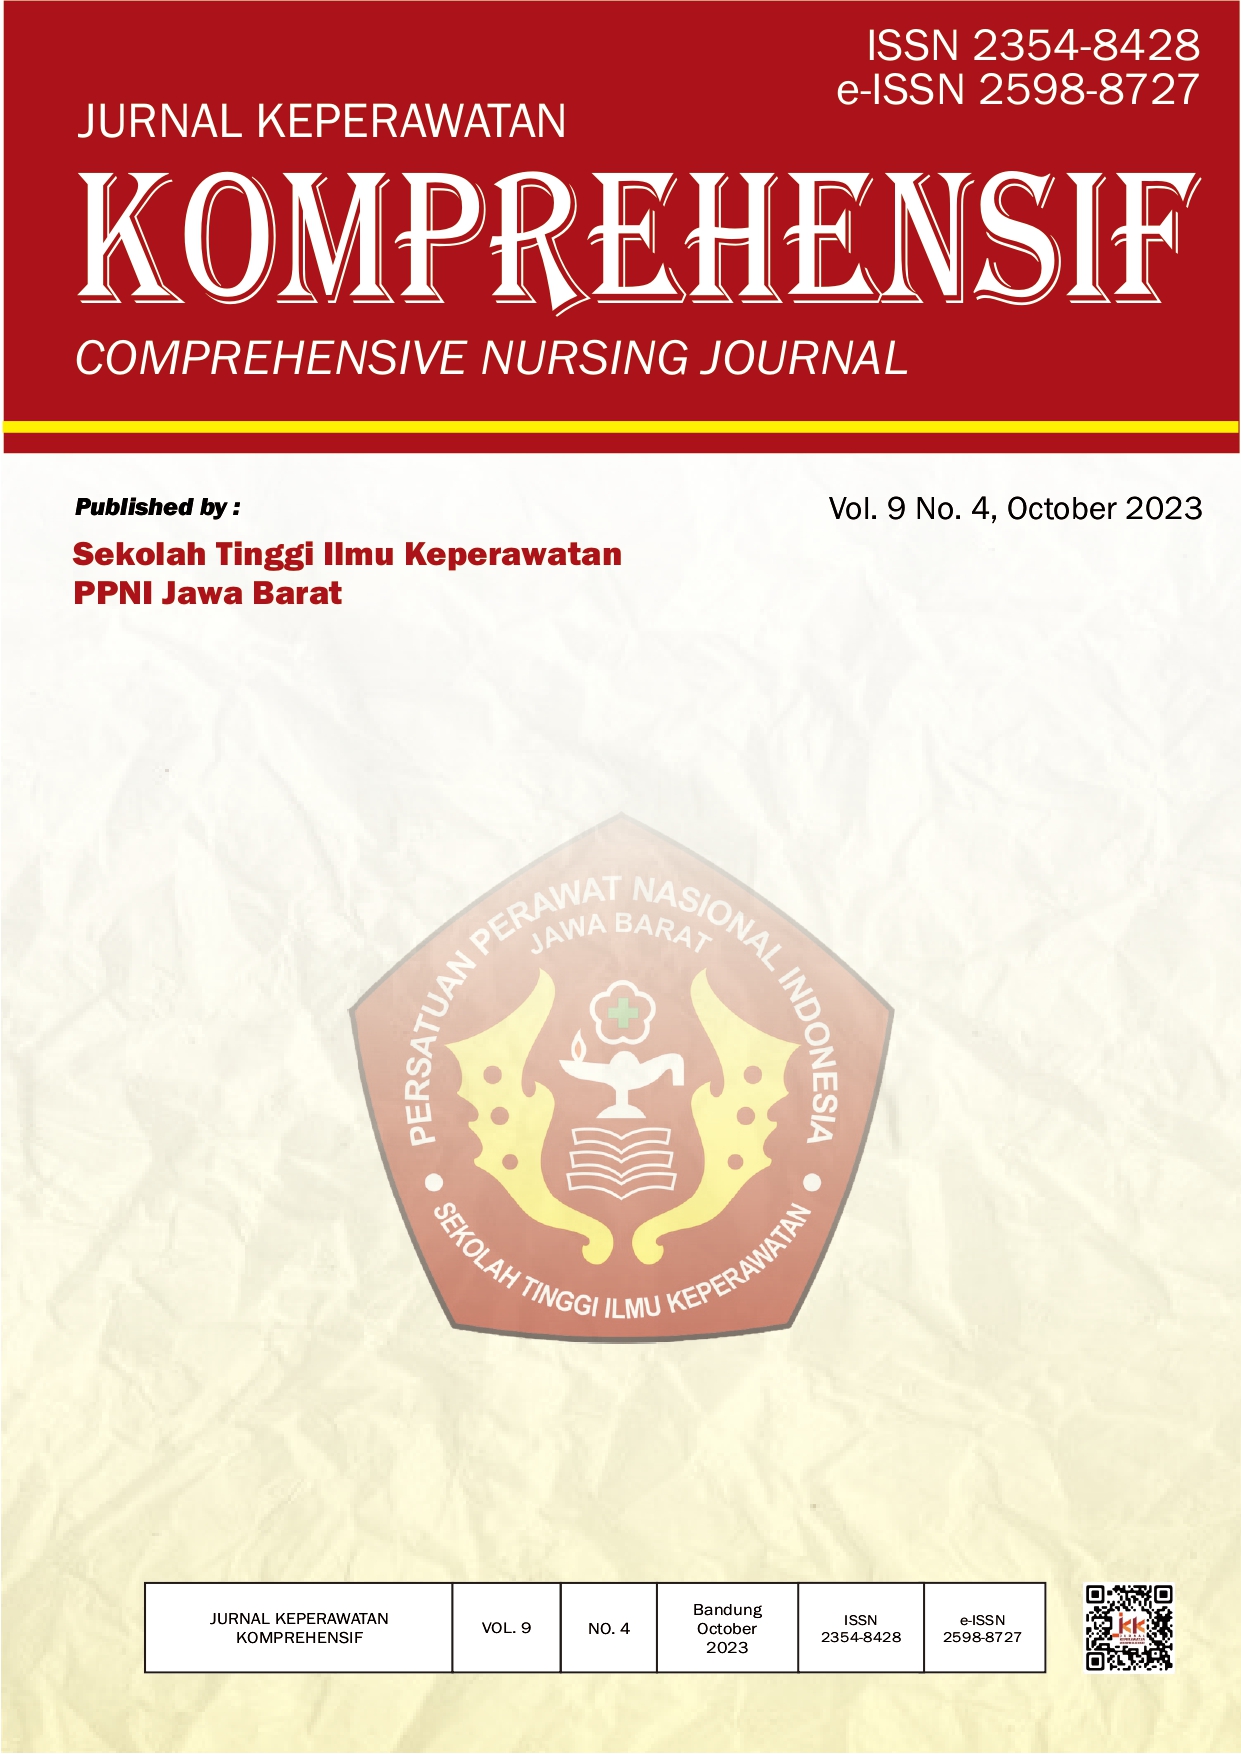 					View Vol. 9 No. 4 (2023): JURNAL KEPERAWATAN KOMPREHENSIF (COMPREHENSIVE NURSING JOURNAL)
				